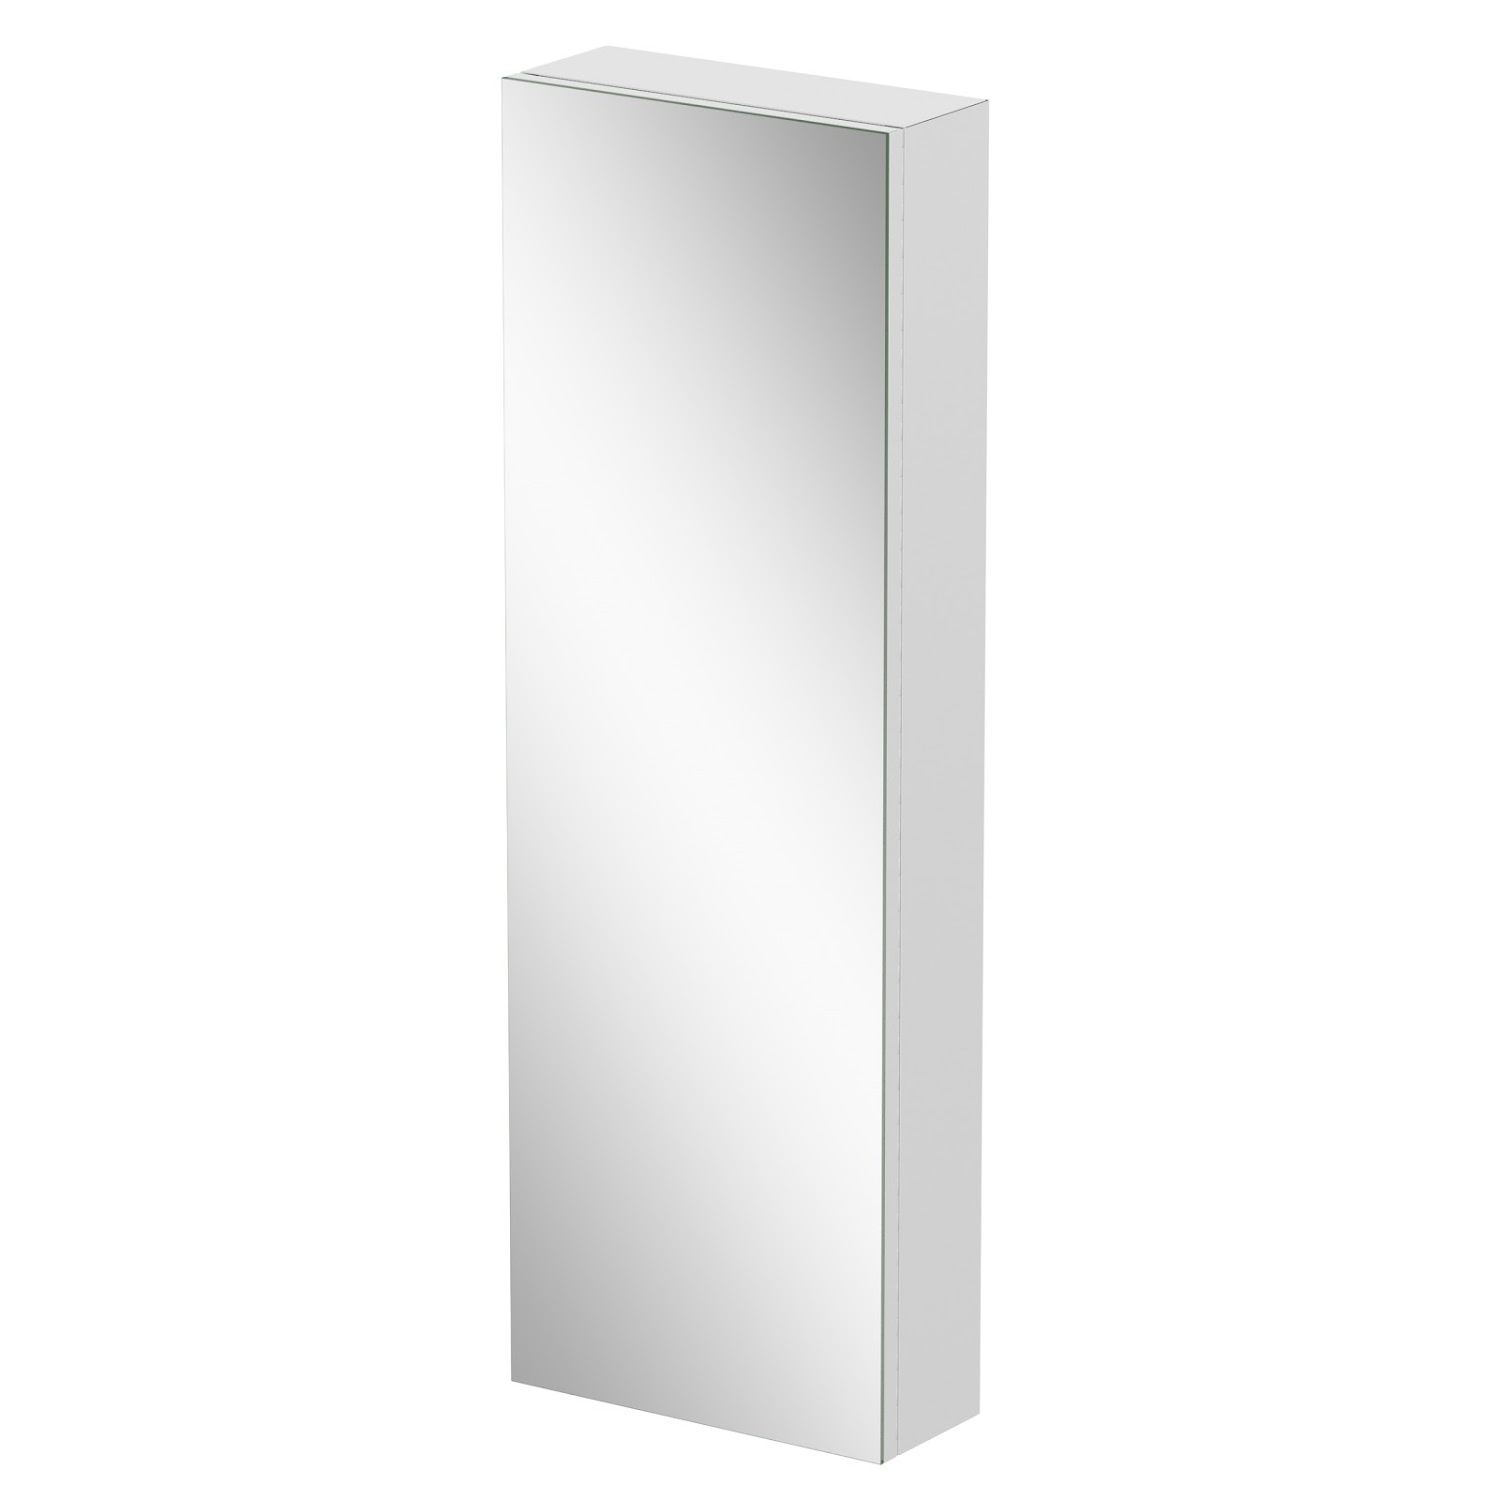 Stainless Steel Wall Mounted Single Door Bathroom Mirror Cabinet Storage Cabinet Furniture for Bathroom